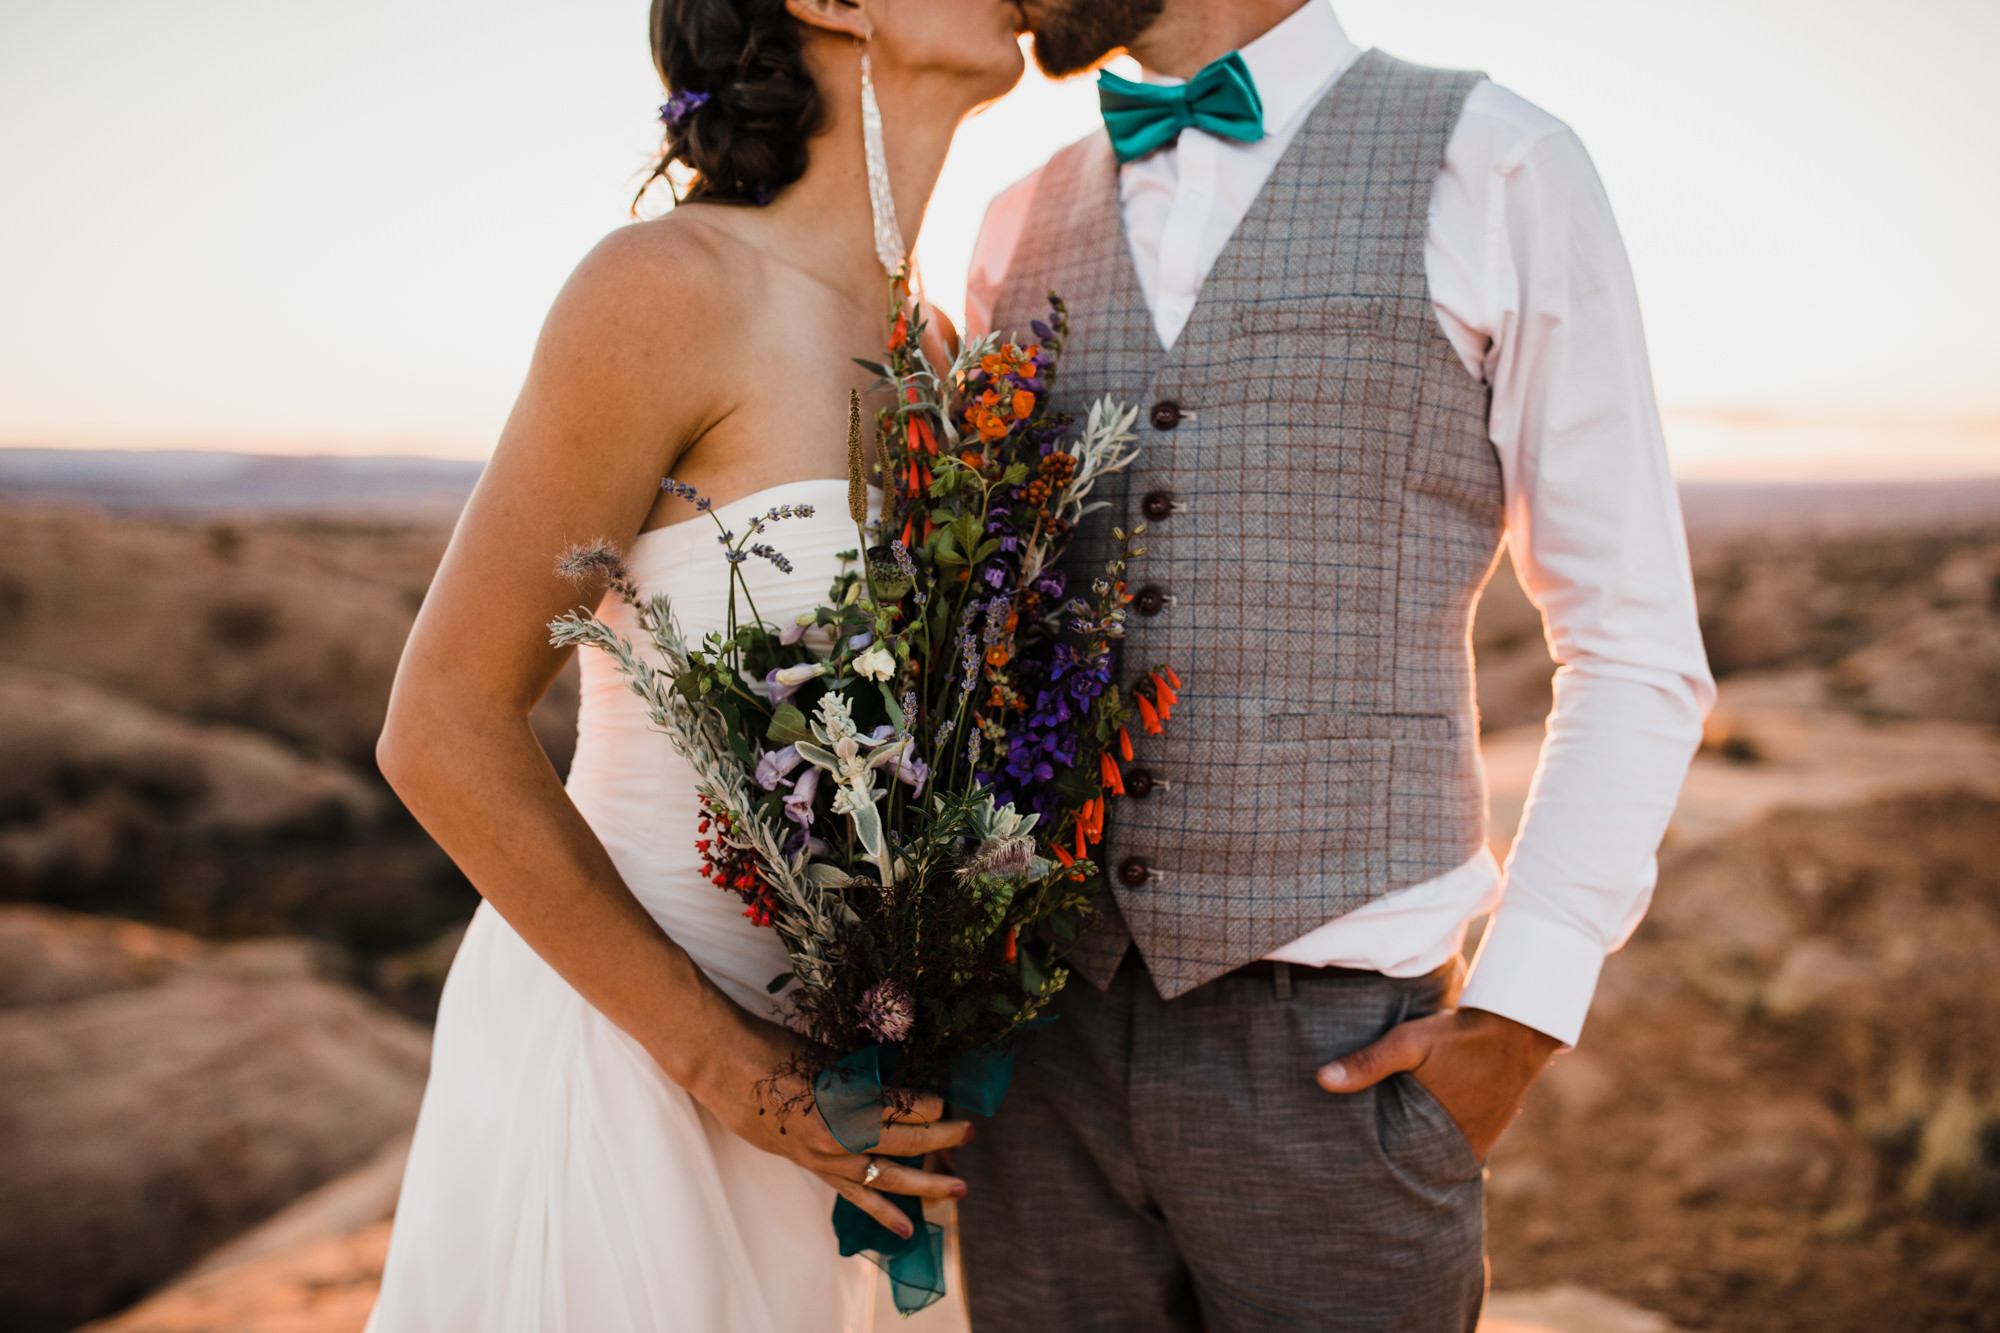 backyard wedding in Moab, Utah | Adventure Wedding Photography | www.thehearnes.com